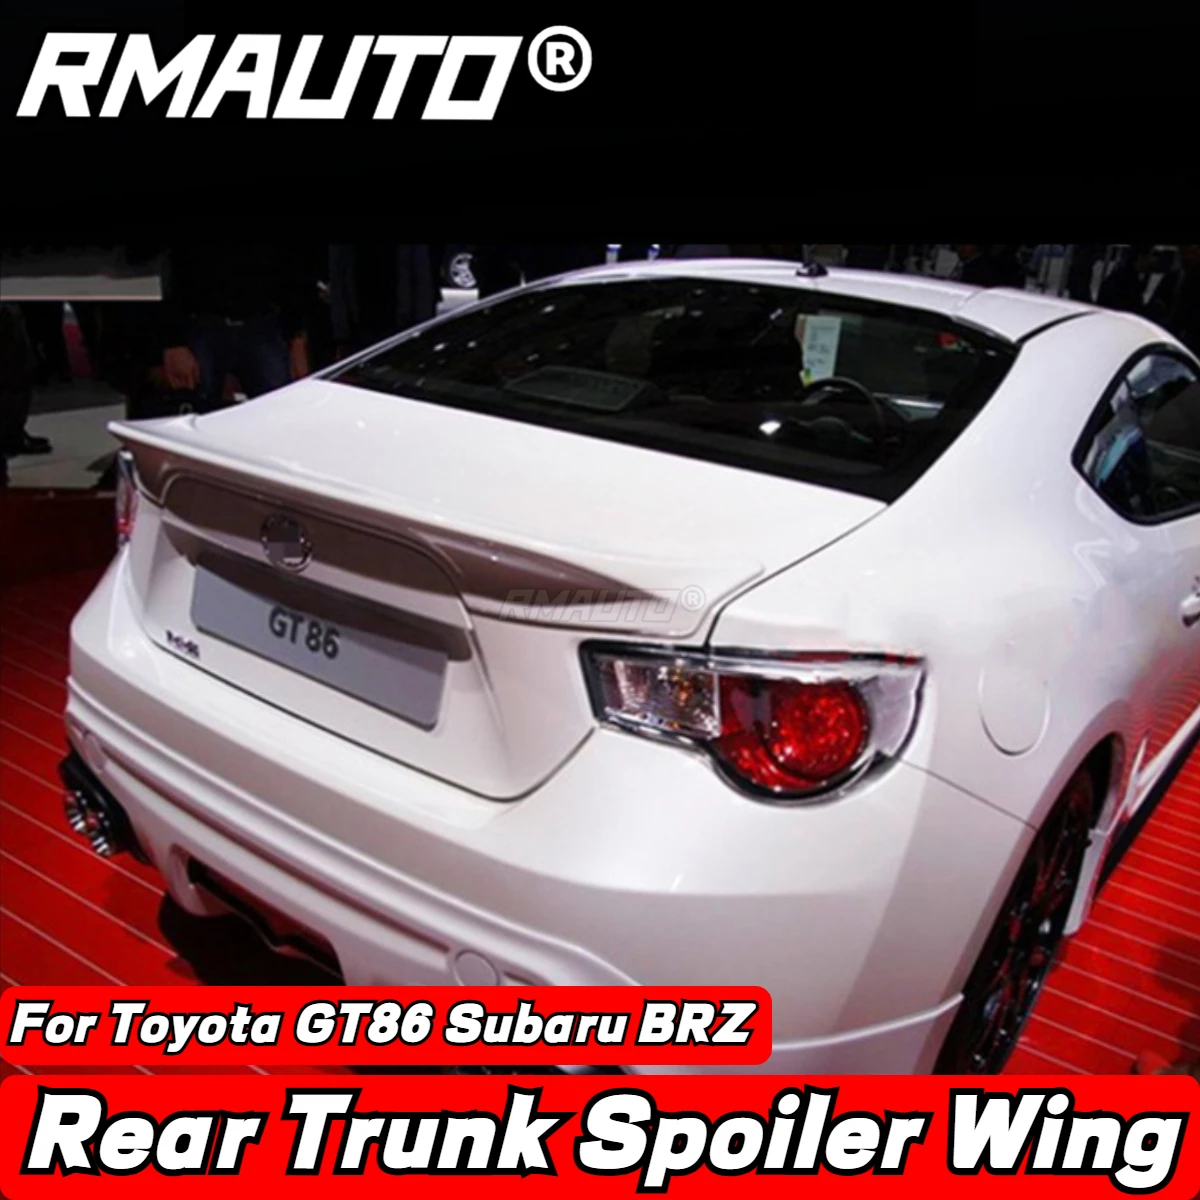 

RMAUTO Carbon Fiber Car Rear Spoiler Wing LEG MORTOR SPORT Style Trunk Lip Body Kit For Toyota GT86 Subaru BRZ Car Accessories